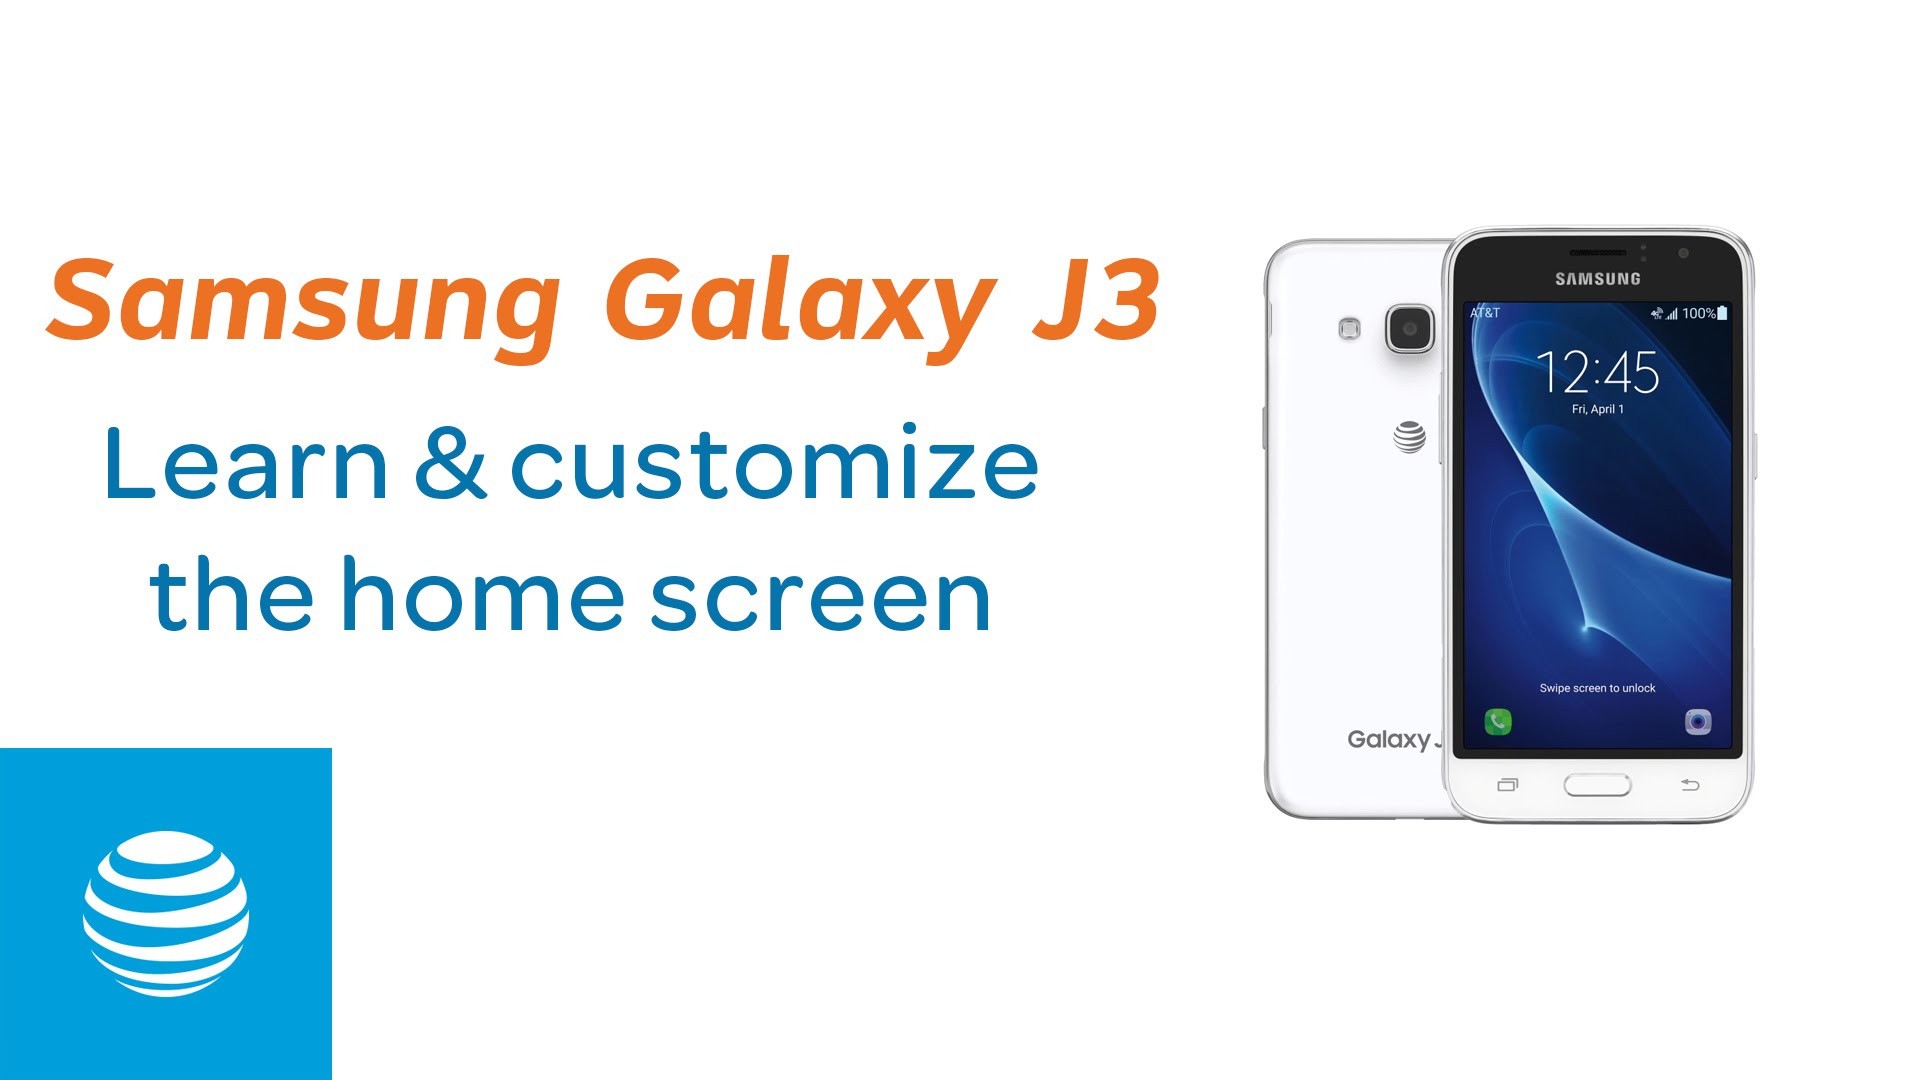 Samsung Galaxy S3 Live Wallpaper - Retrieve Voicemail On Samsung J3 - HD Wallpaper 